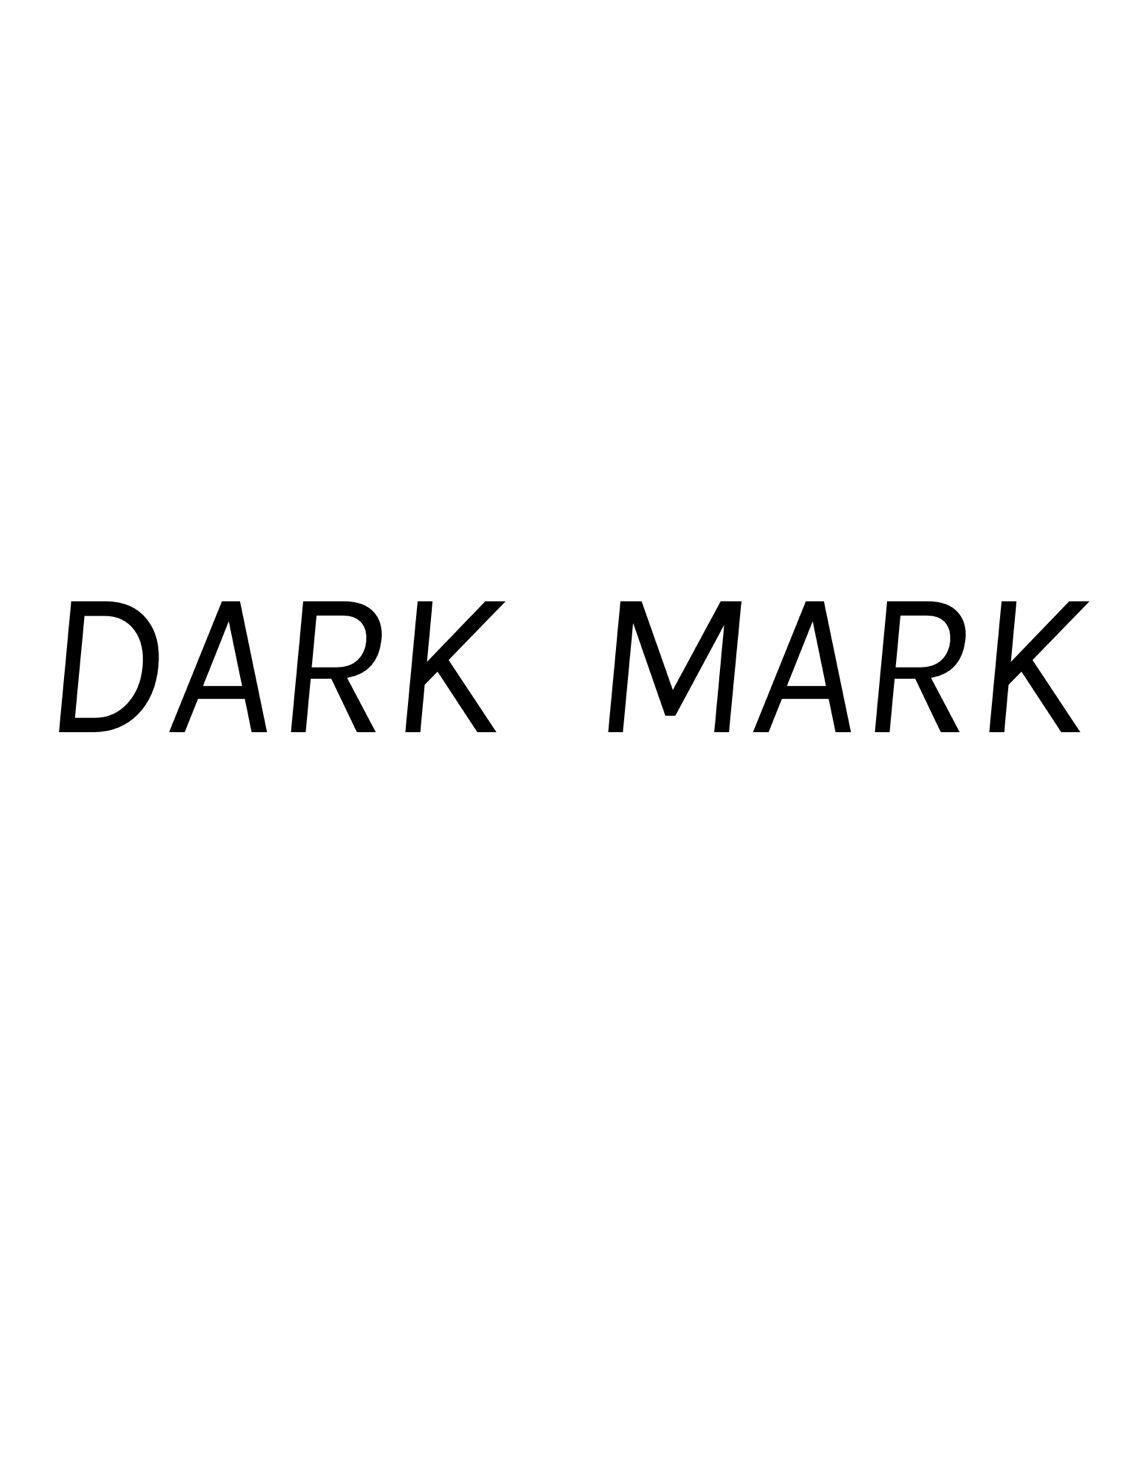 DARK MARK